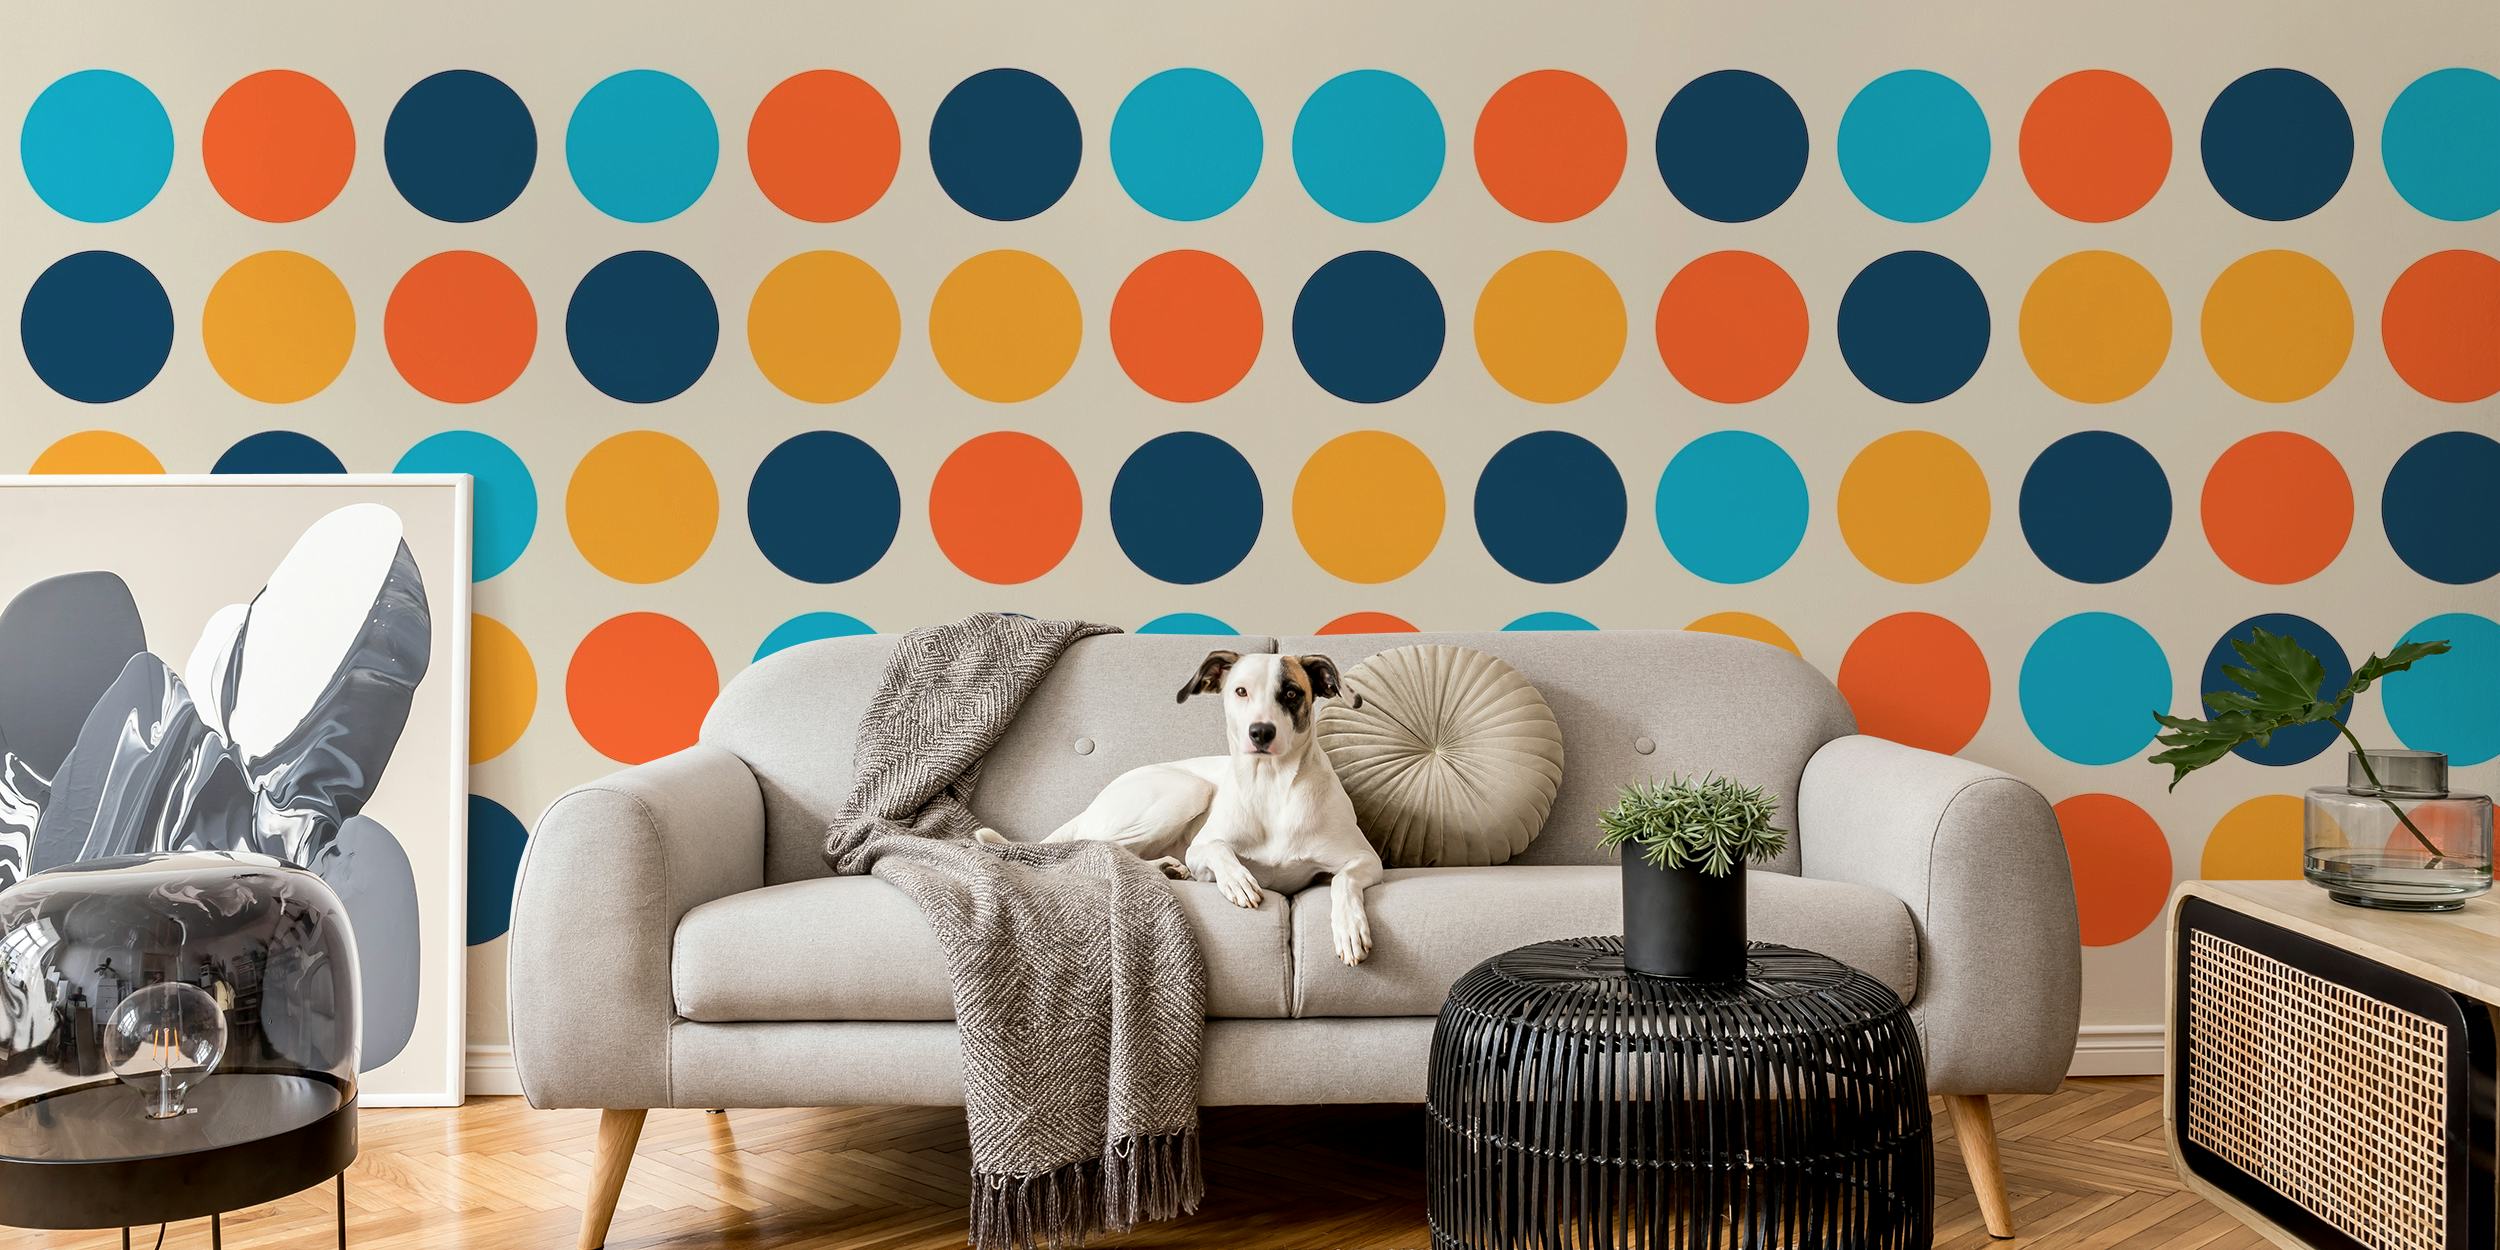 Geometric circle pattern wall mural in blue and orange